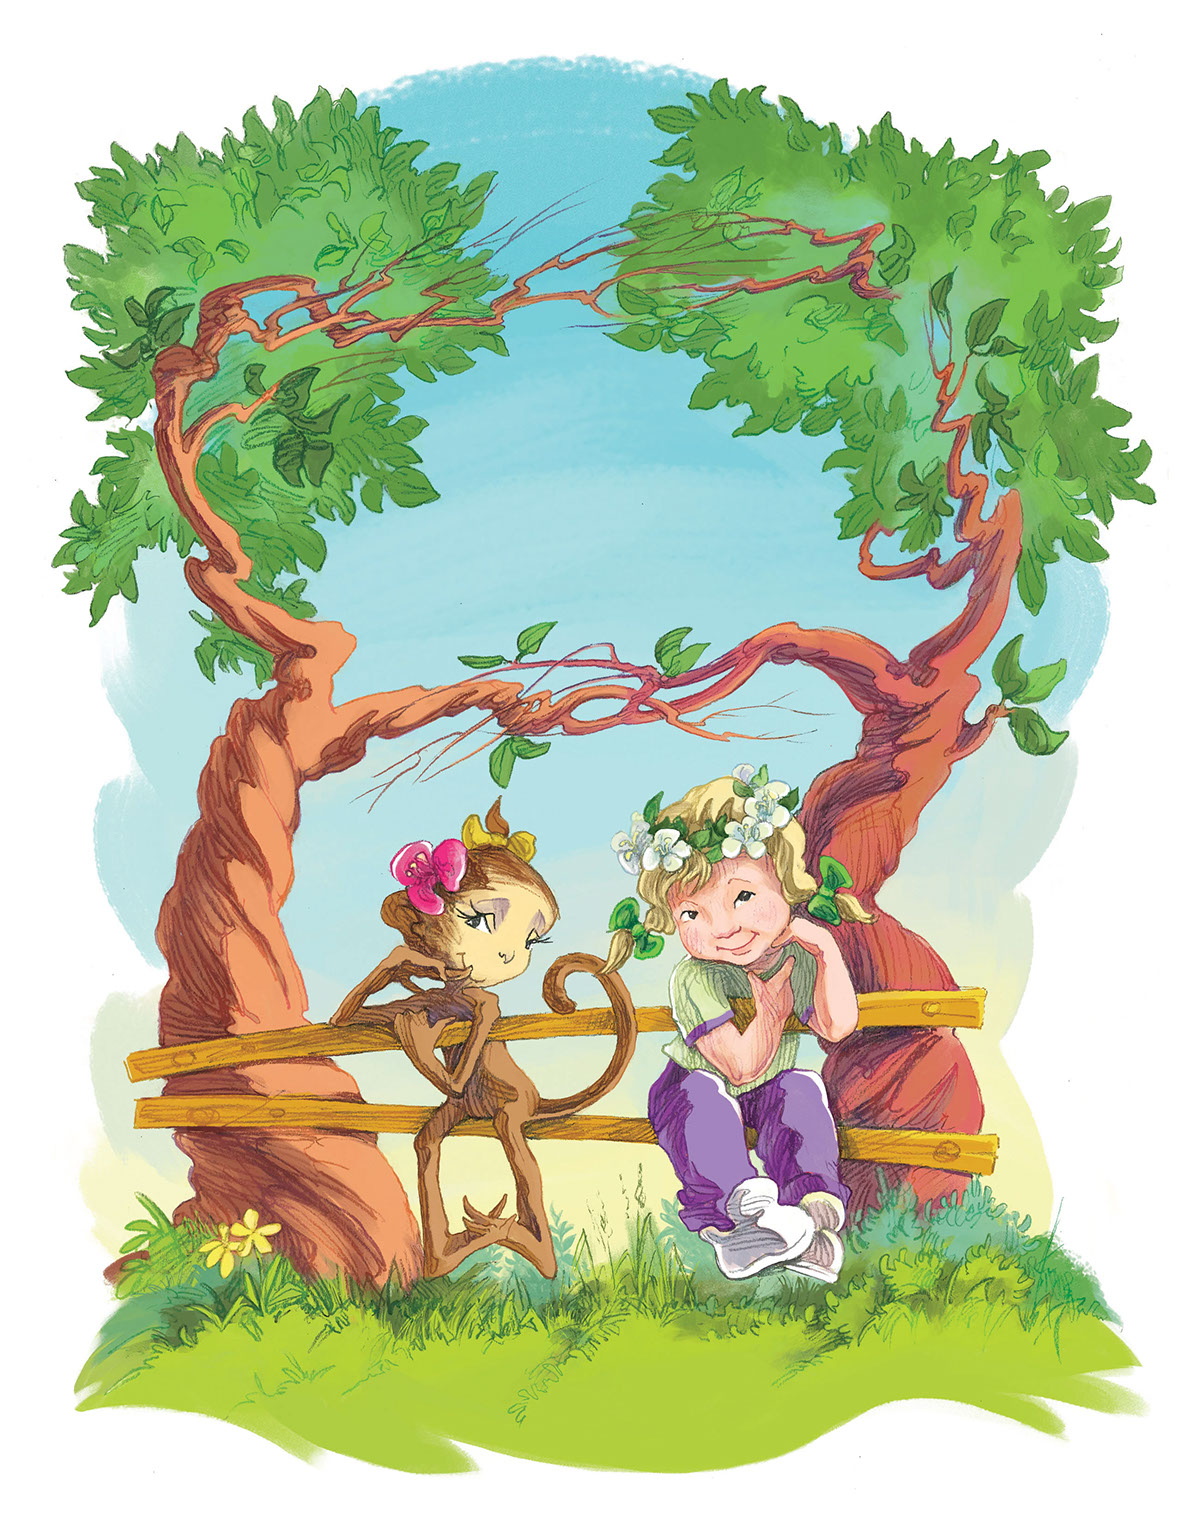 children book small girl monkey fantasy story Fun child cartoon adventure Original style pencil